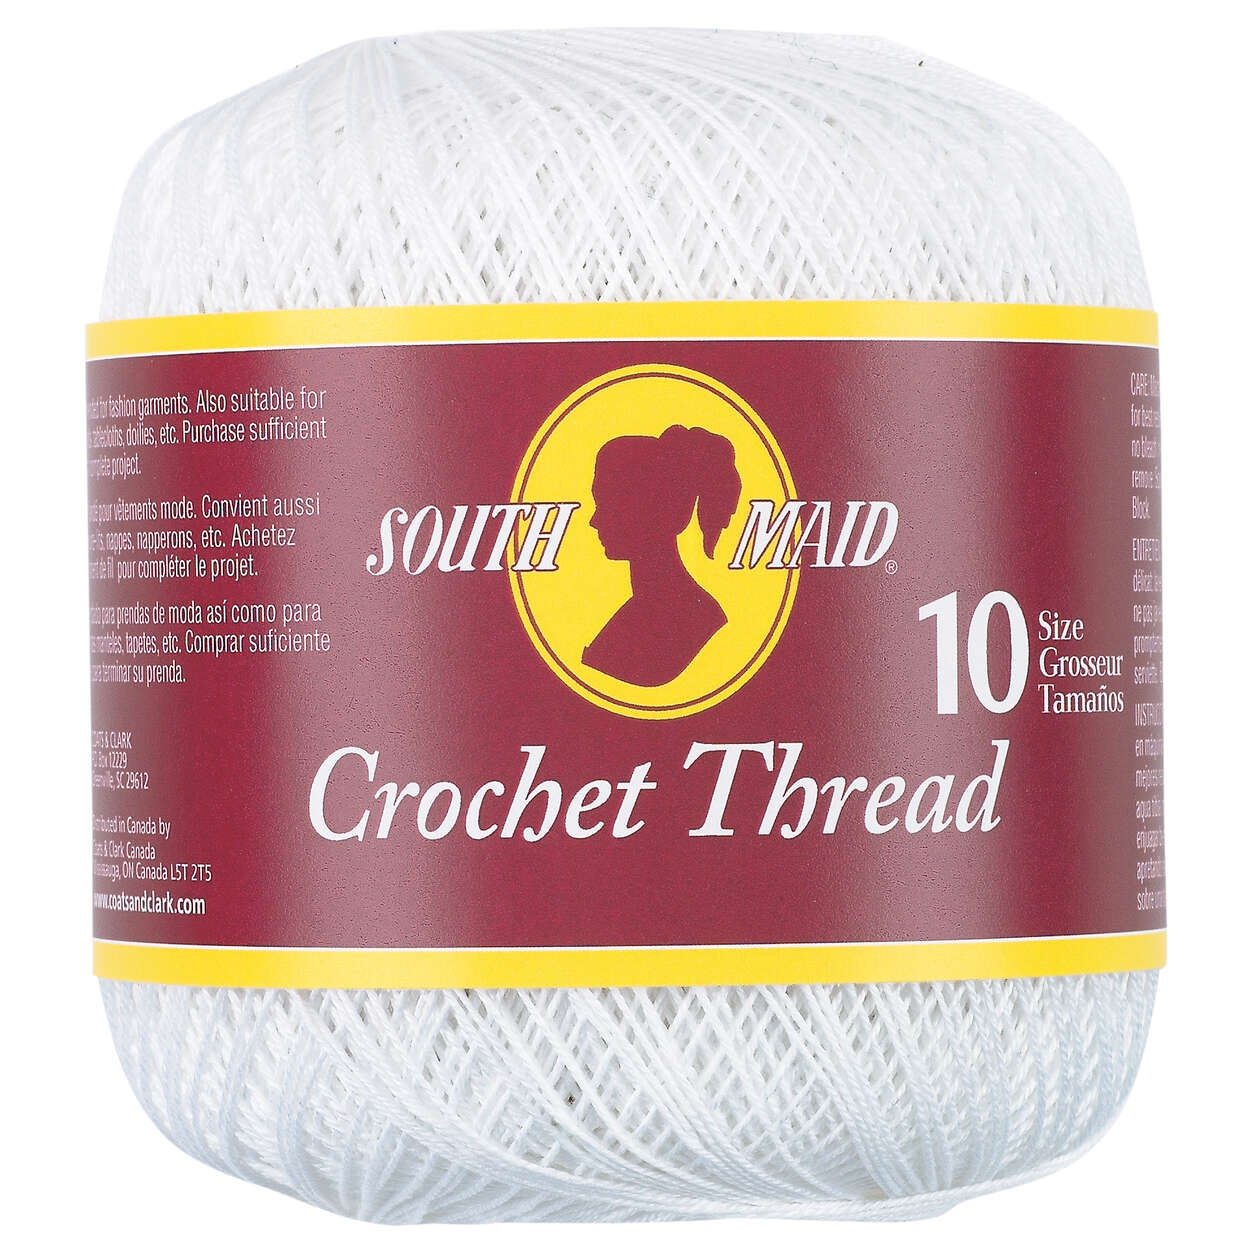 South Maid Crochet Thread, Size 10